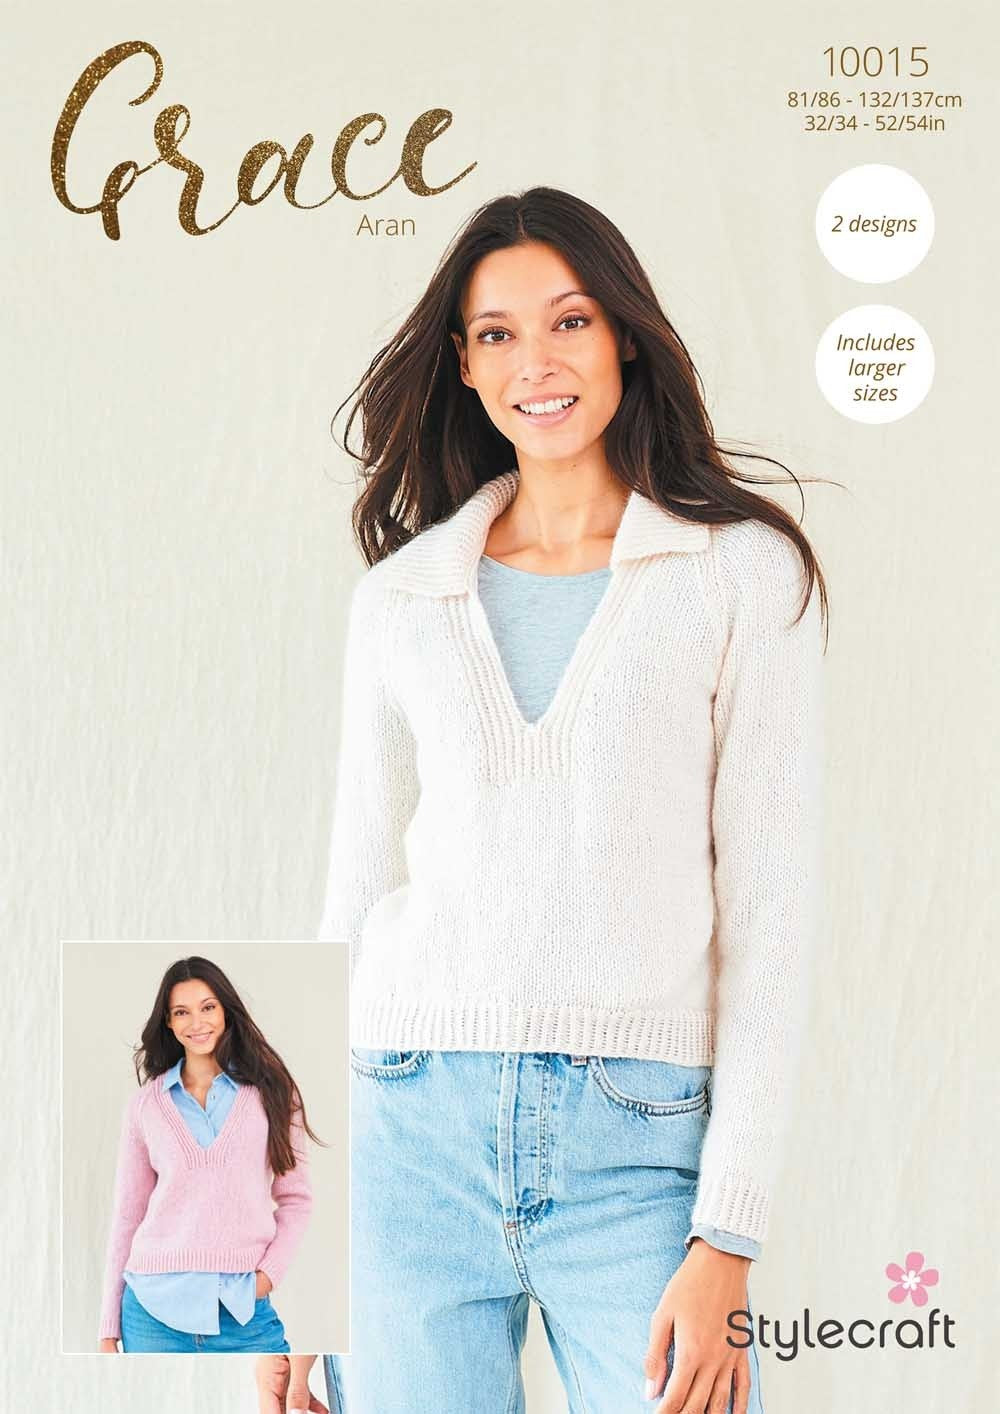 Stylecraft Grace - Sweaters (10015)